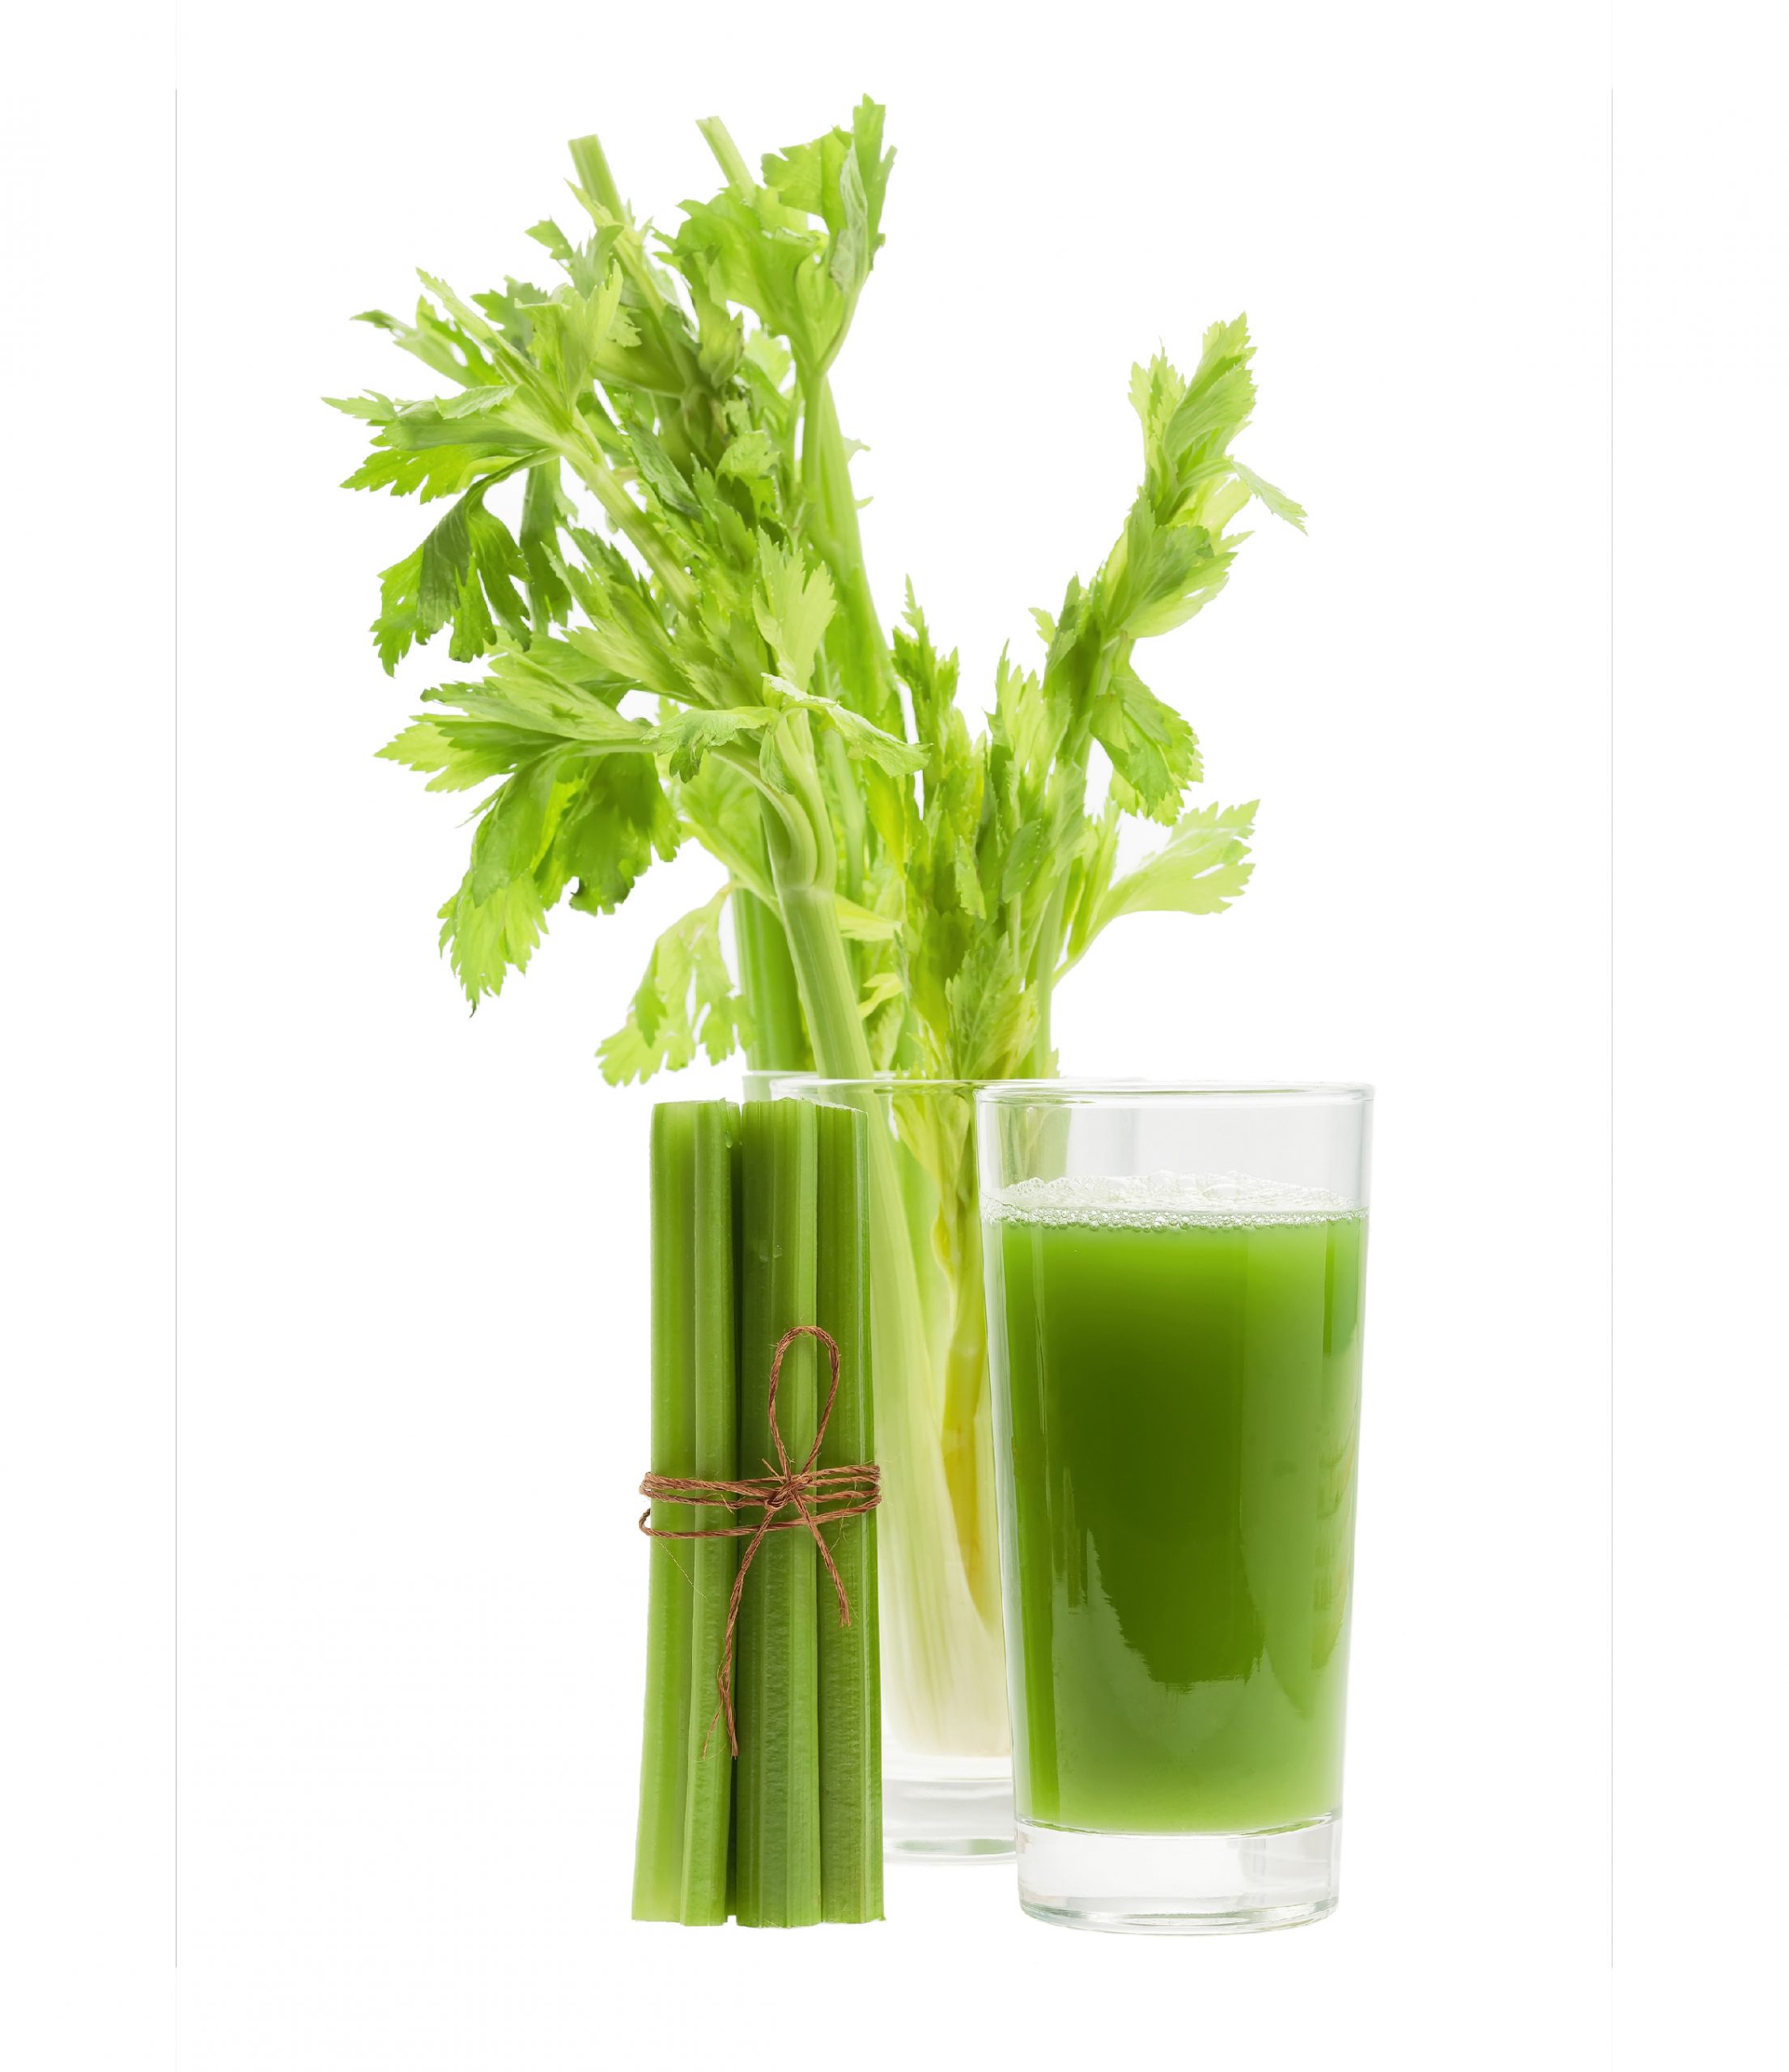 Celery Juice Recipe By Leora Acoca Goldberg - OptimalBody